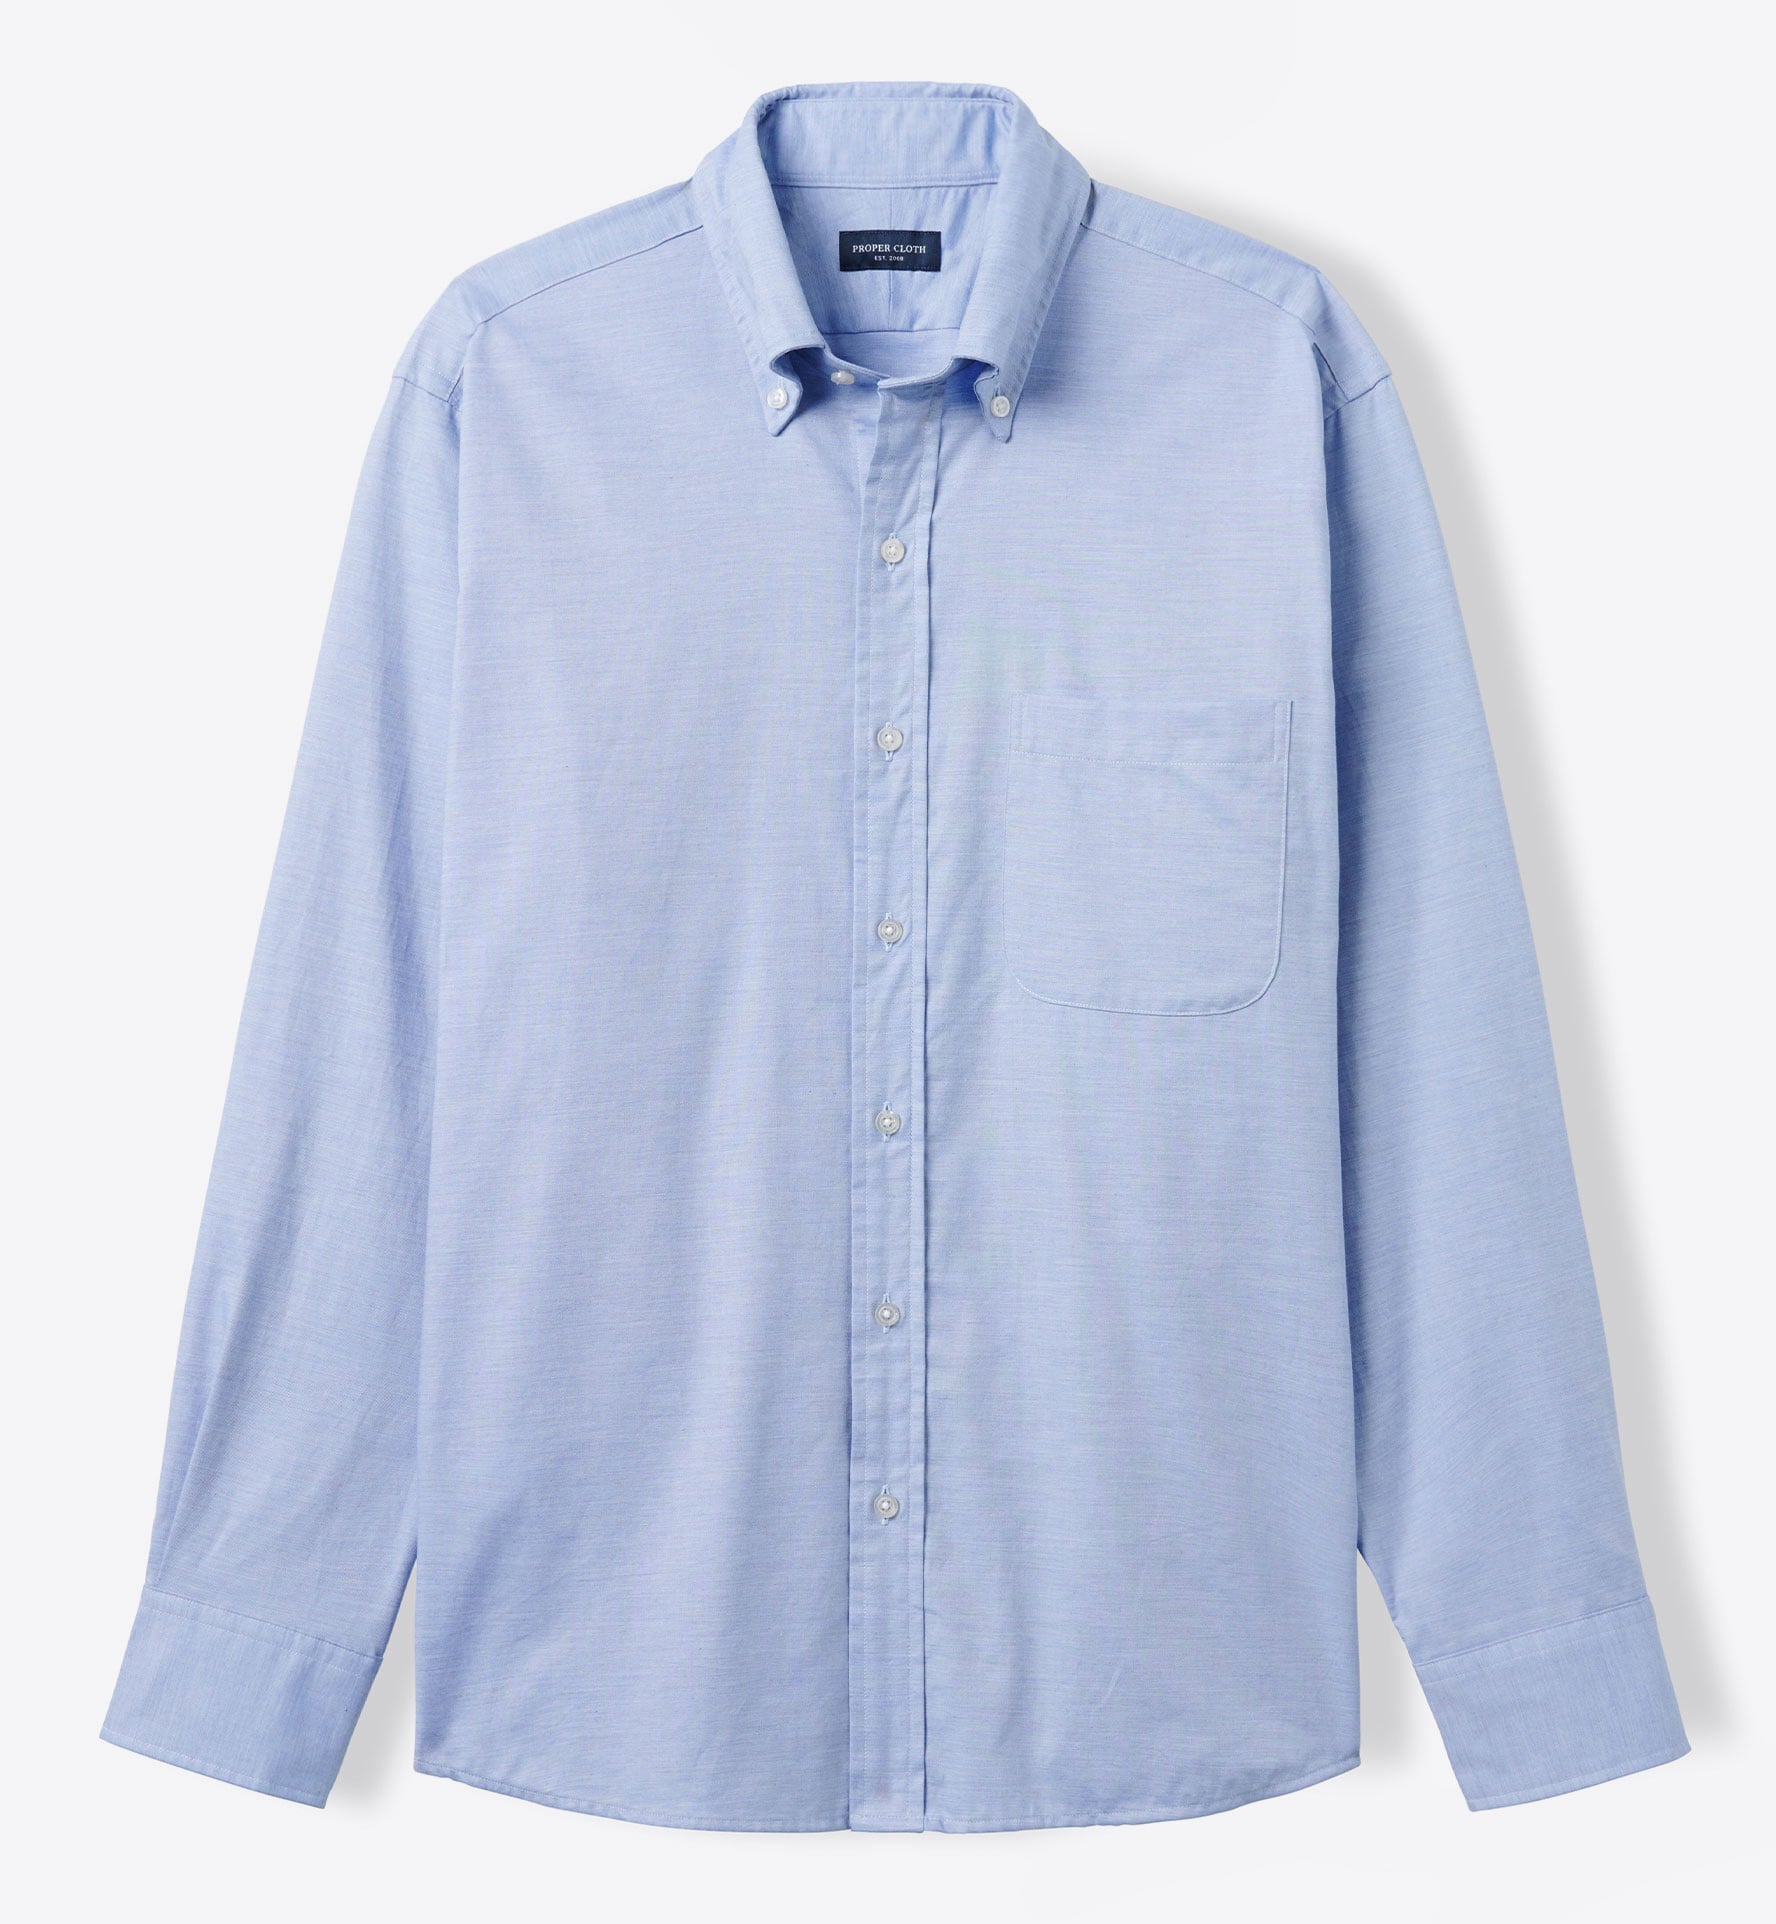 Light Blue Melange Lightweight Oxford Shirt by Proper Cloth